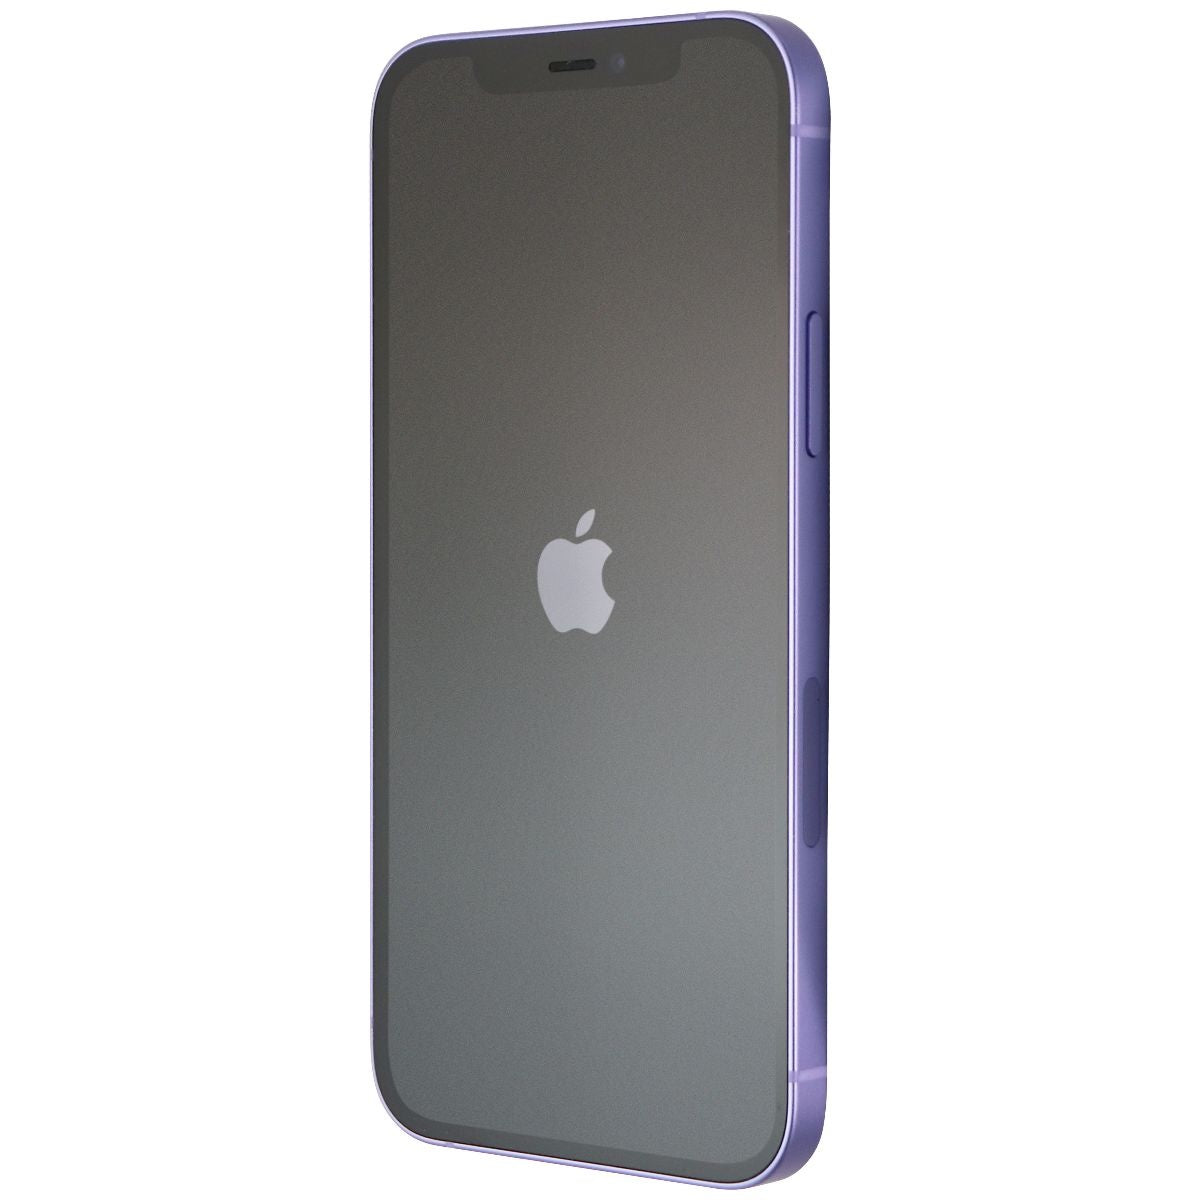 Apple iPhone 12 (6.1-inch) Smartphone (A2172) Unlocked - 64GB / Purple